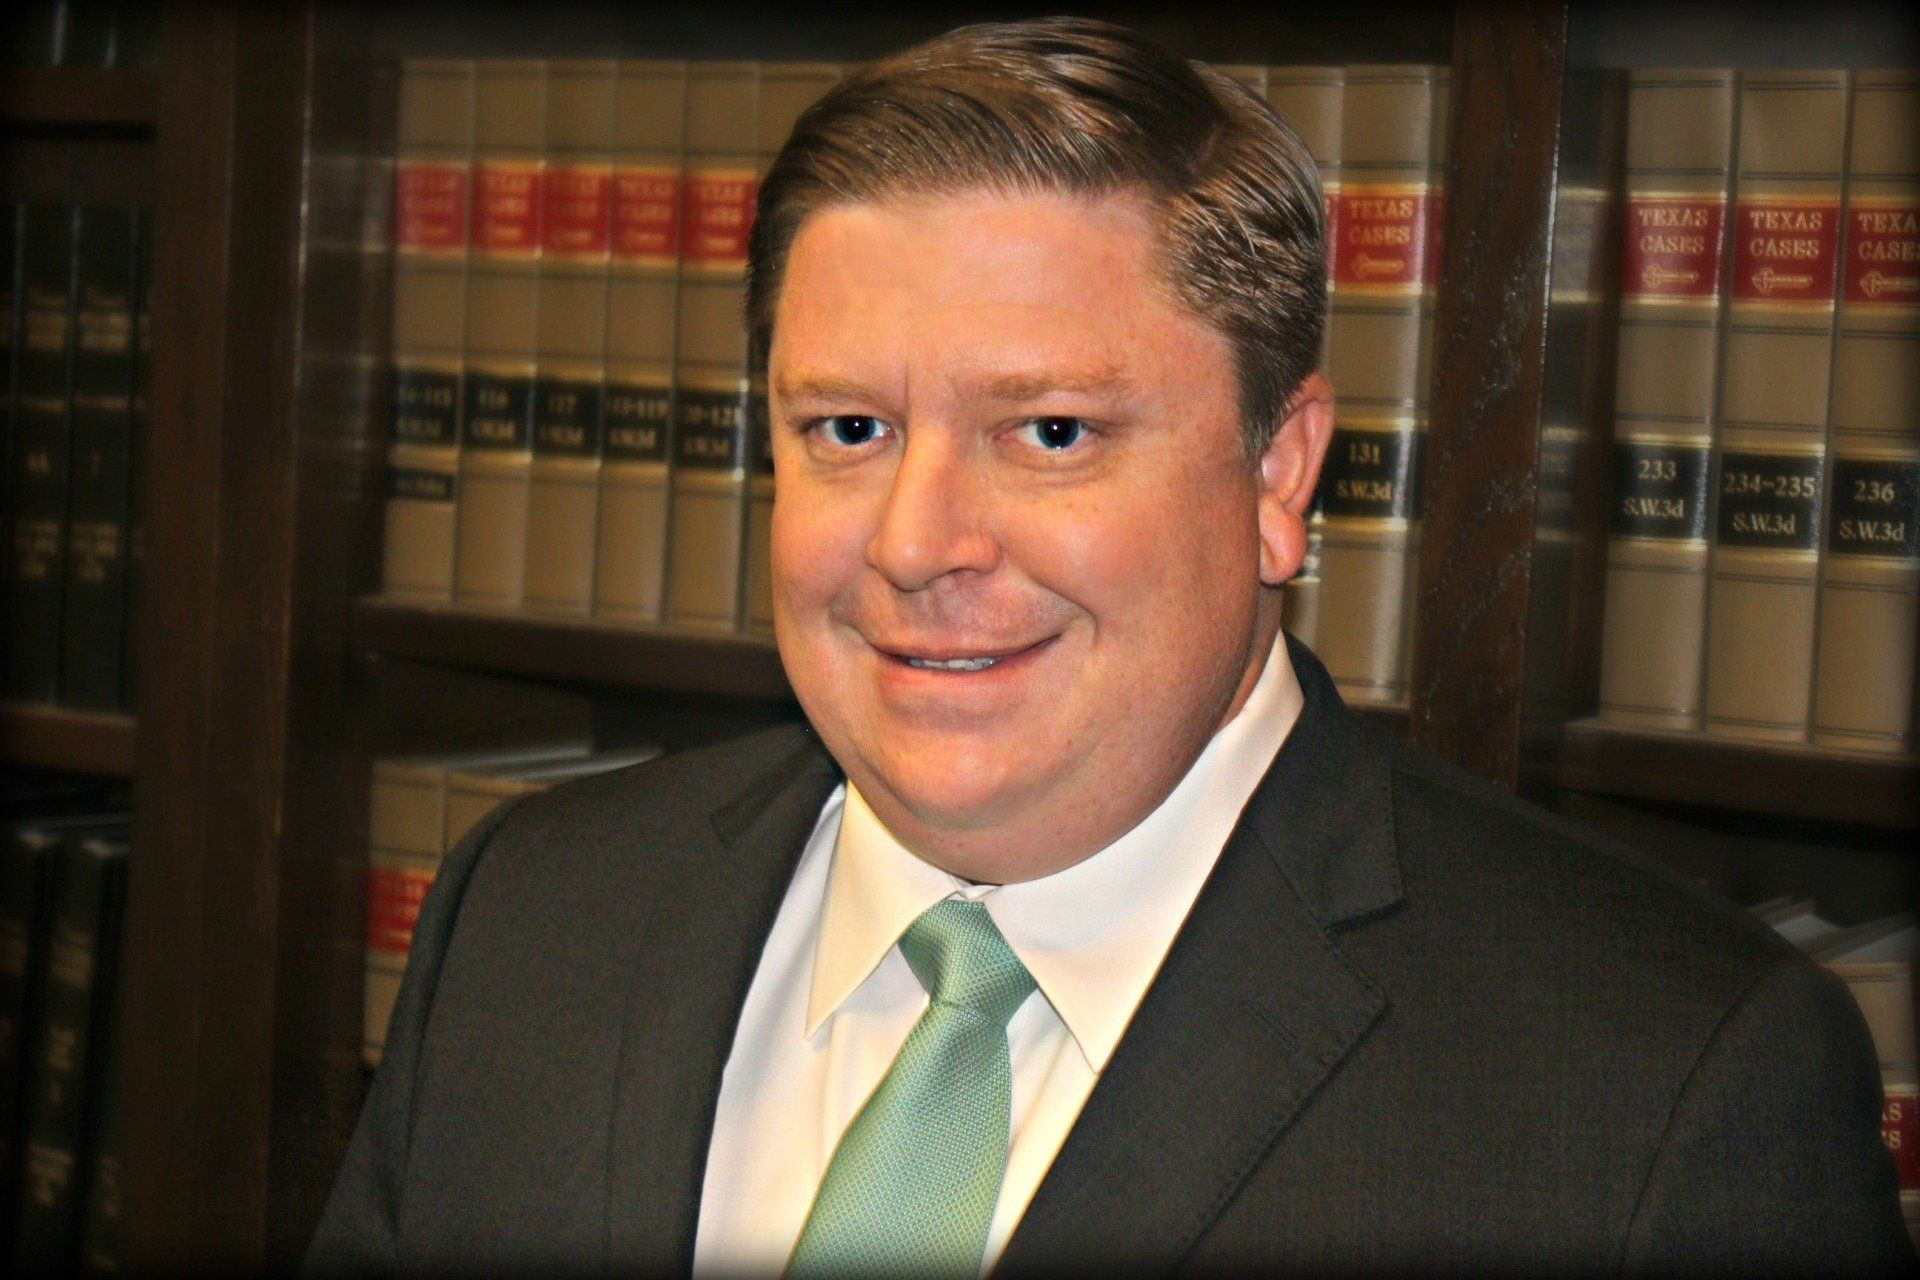 Professional Headshot of N. Kyle Keller - Real Estate Attorney